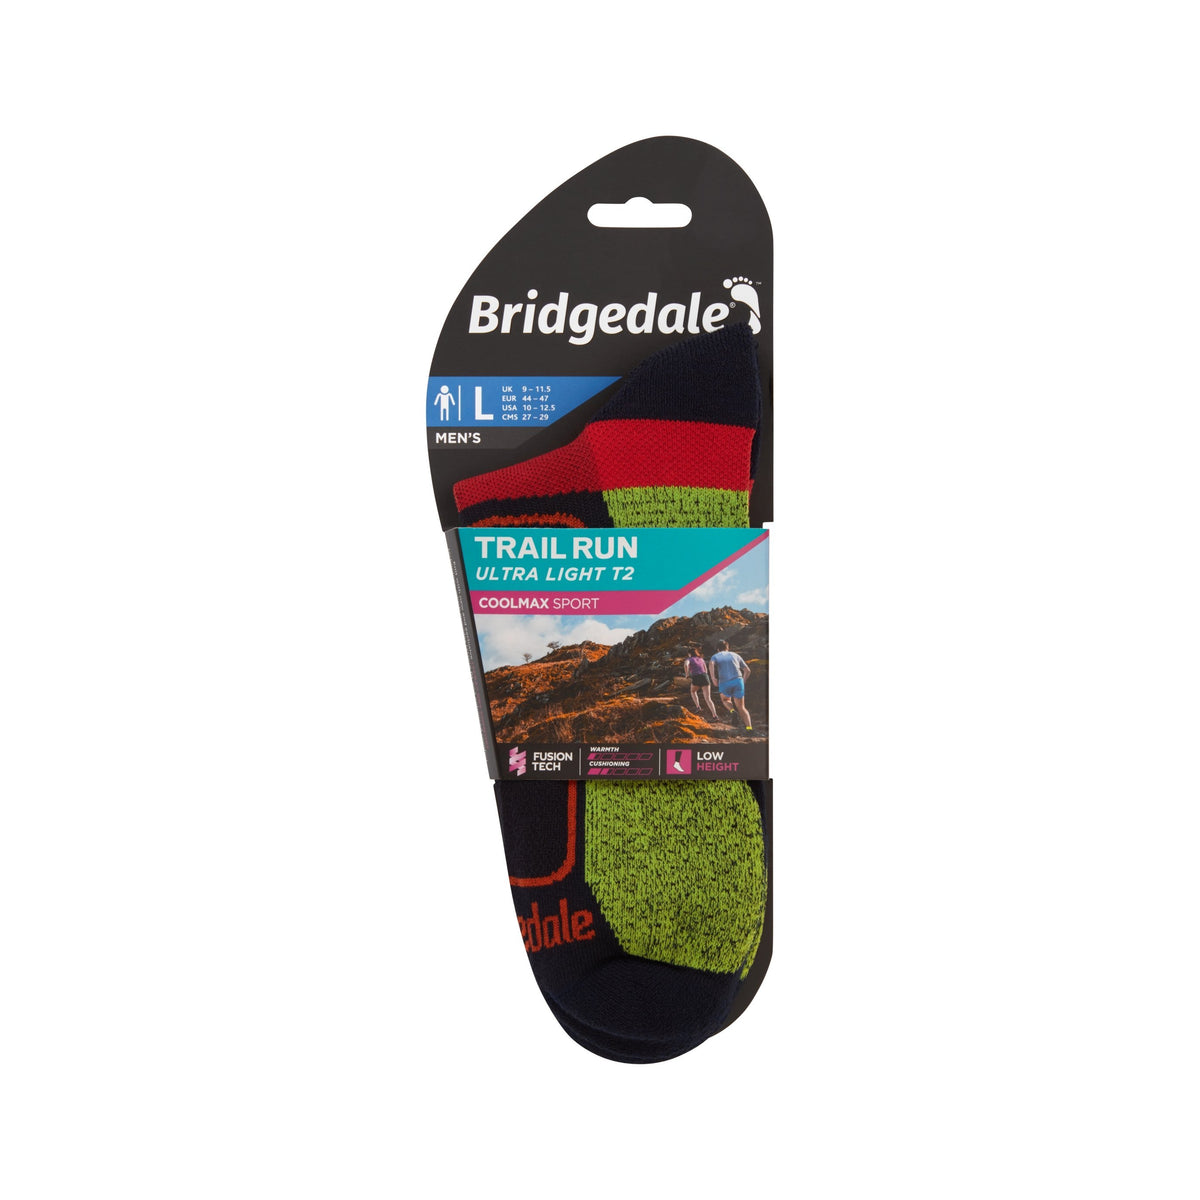 Bridgedale Trail Run UL T2 Low Socks (Men's) - Navy - Find Your Feet Australia Hobart Launceston Tasmania